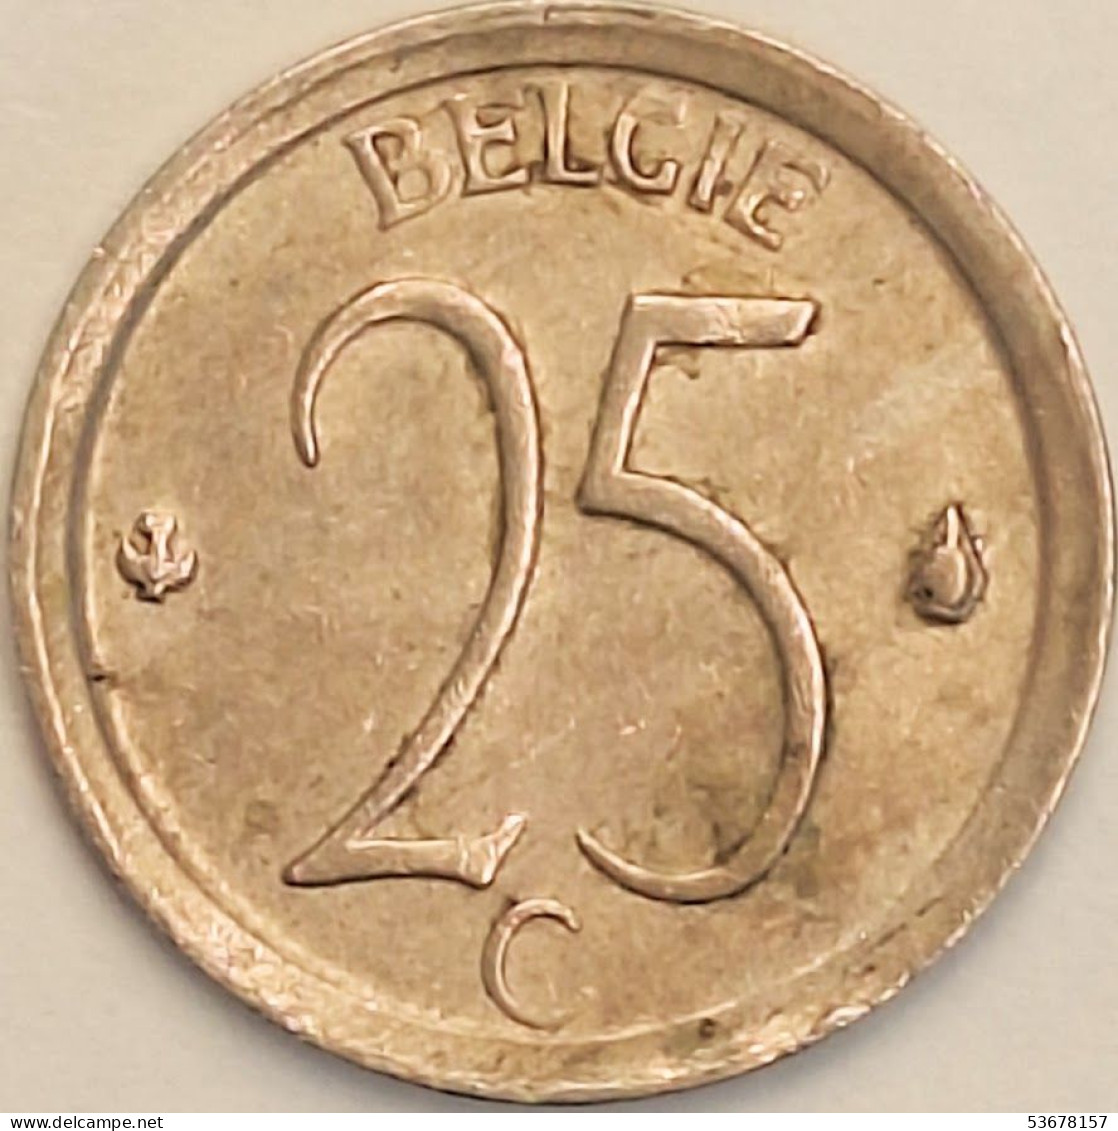 Belgium - 25 Centimes 1969, KM# 154.1 (#3085) - 25 Centimes